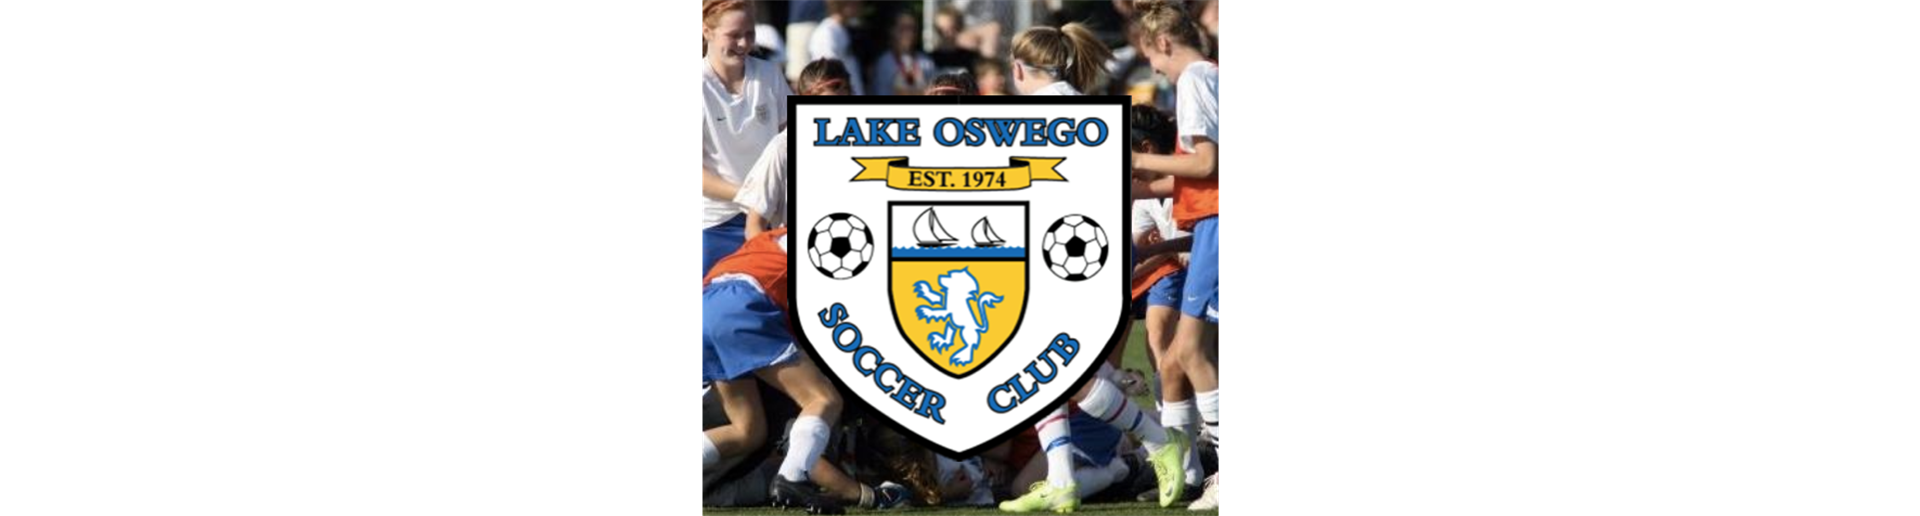 Lake Oswego Soccer Club